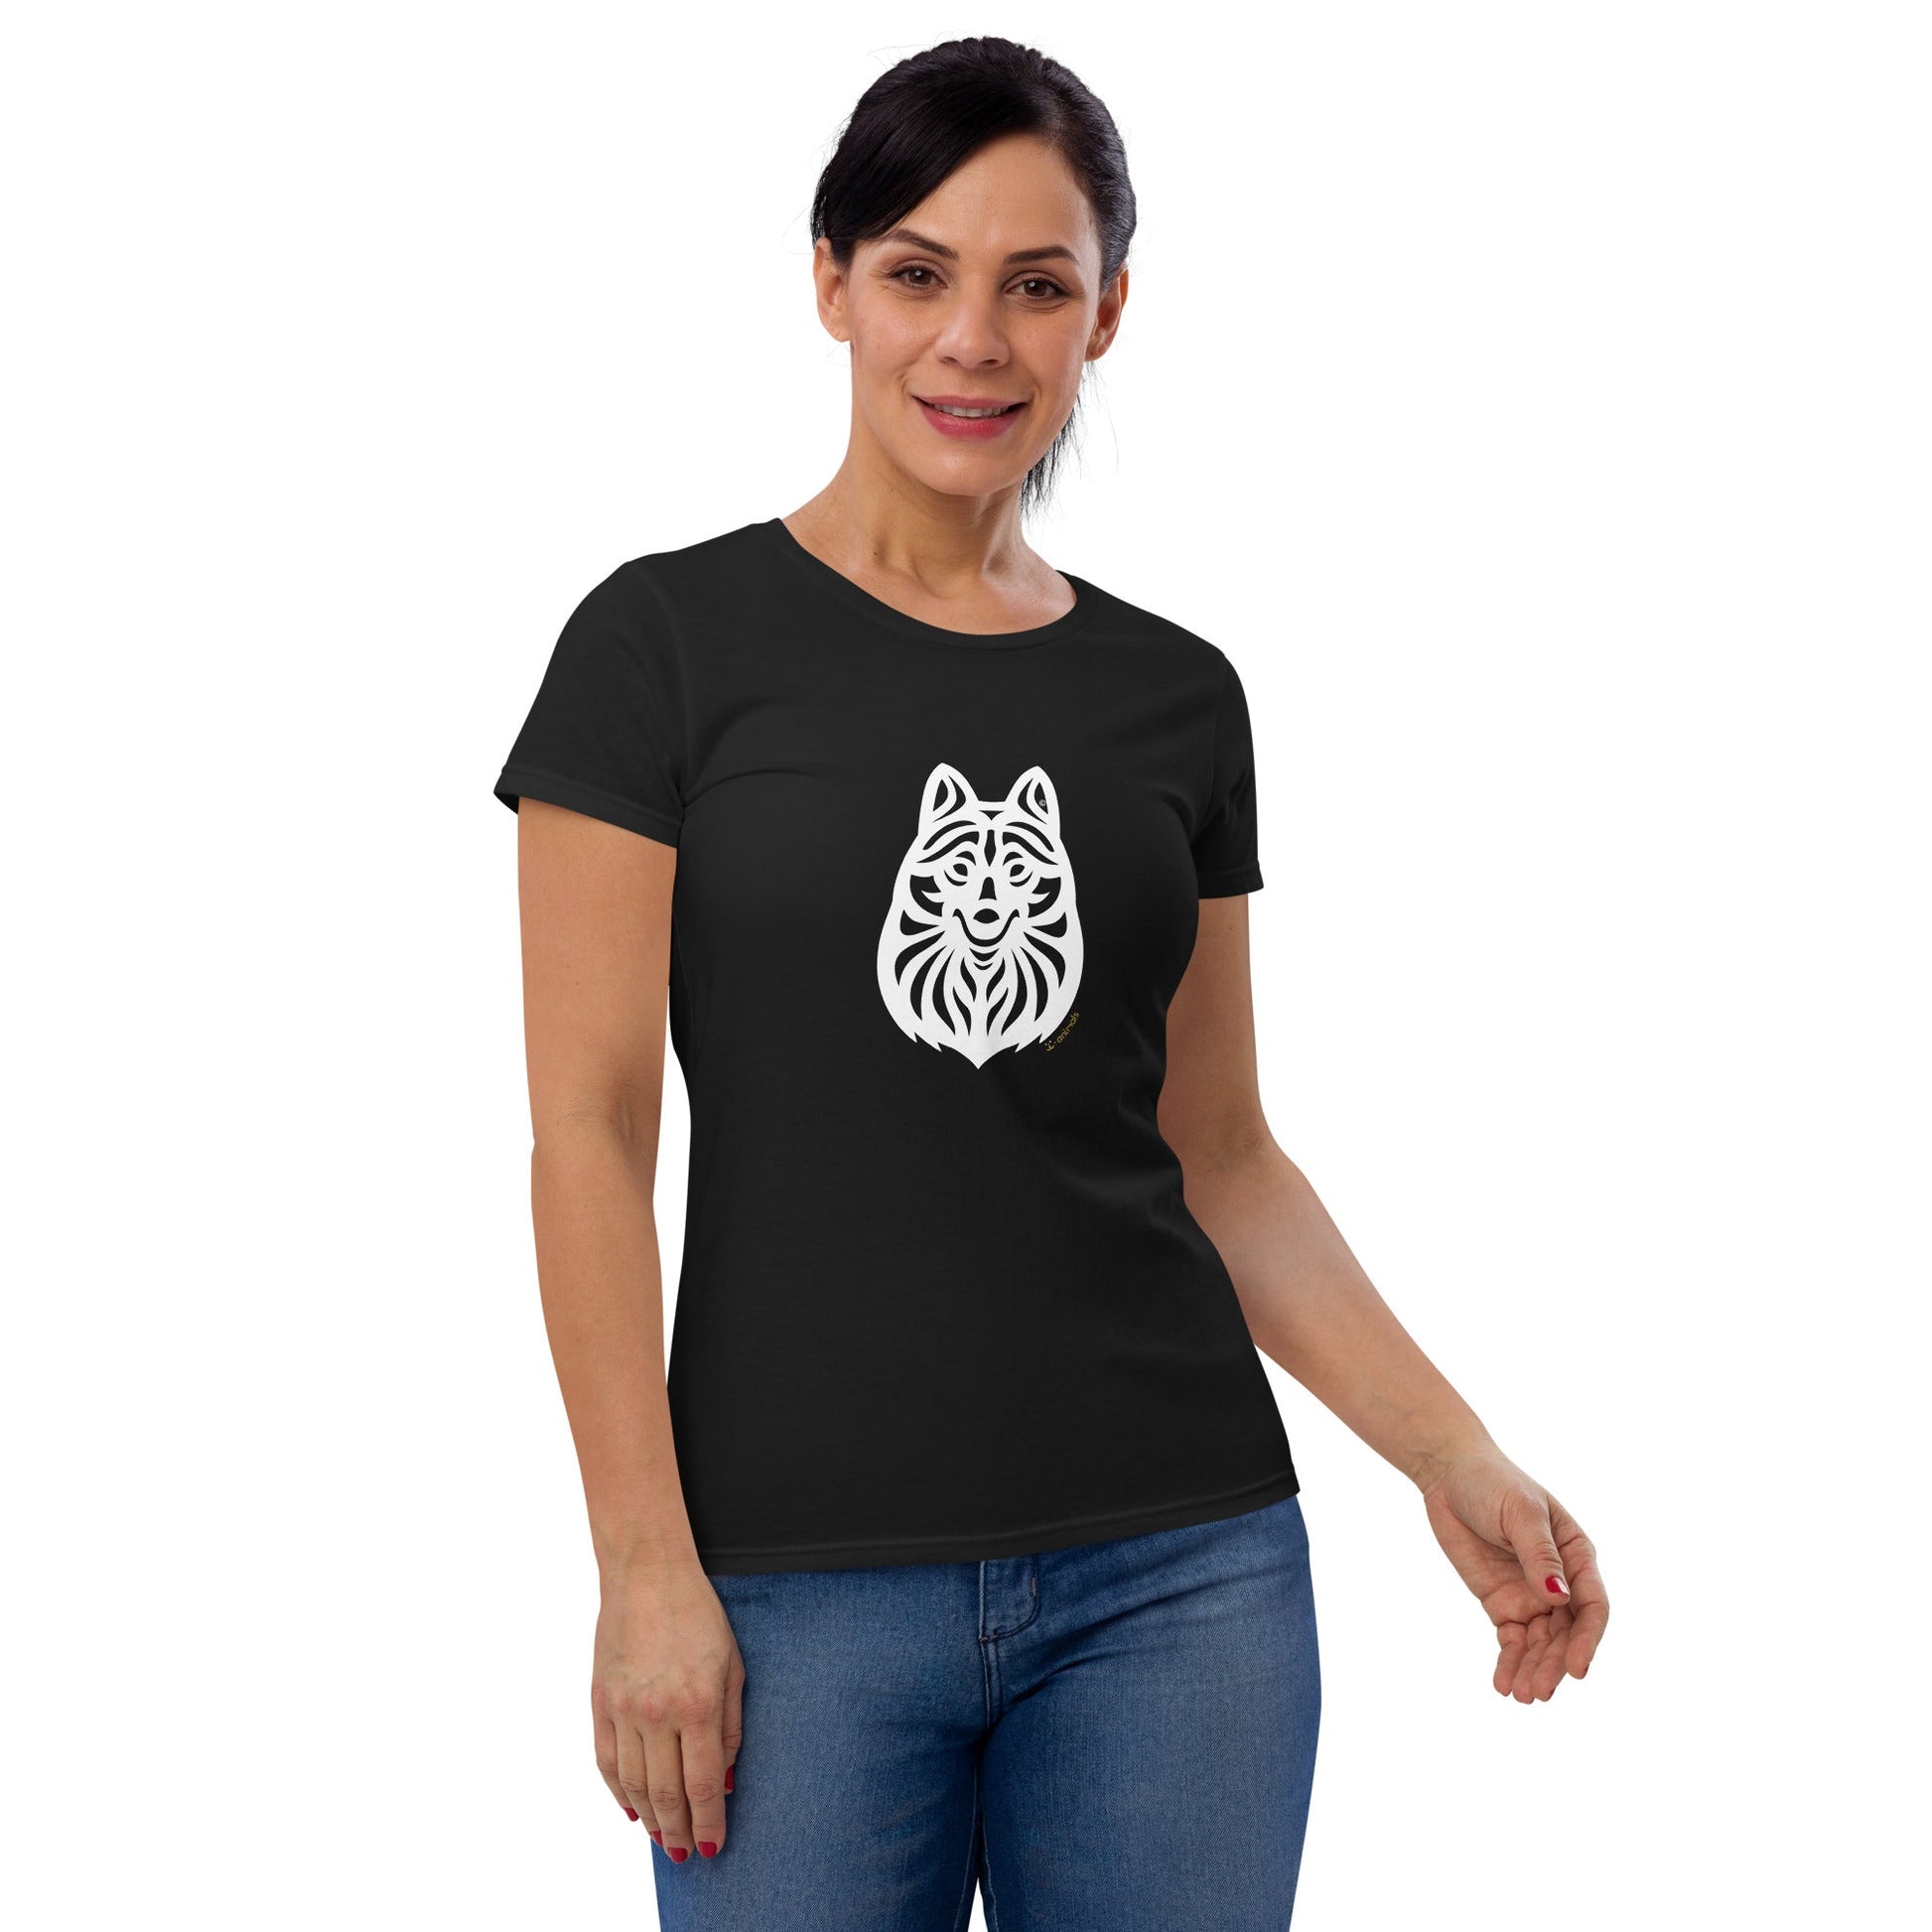 Camiseta feminina de manga curta - Schipperke - Tribal i-animals